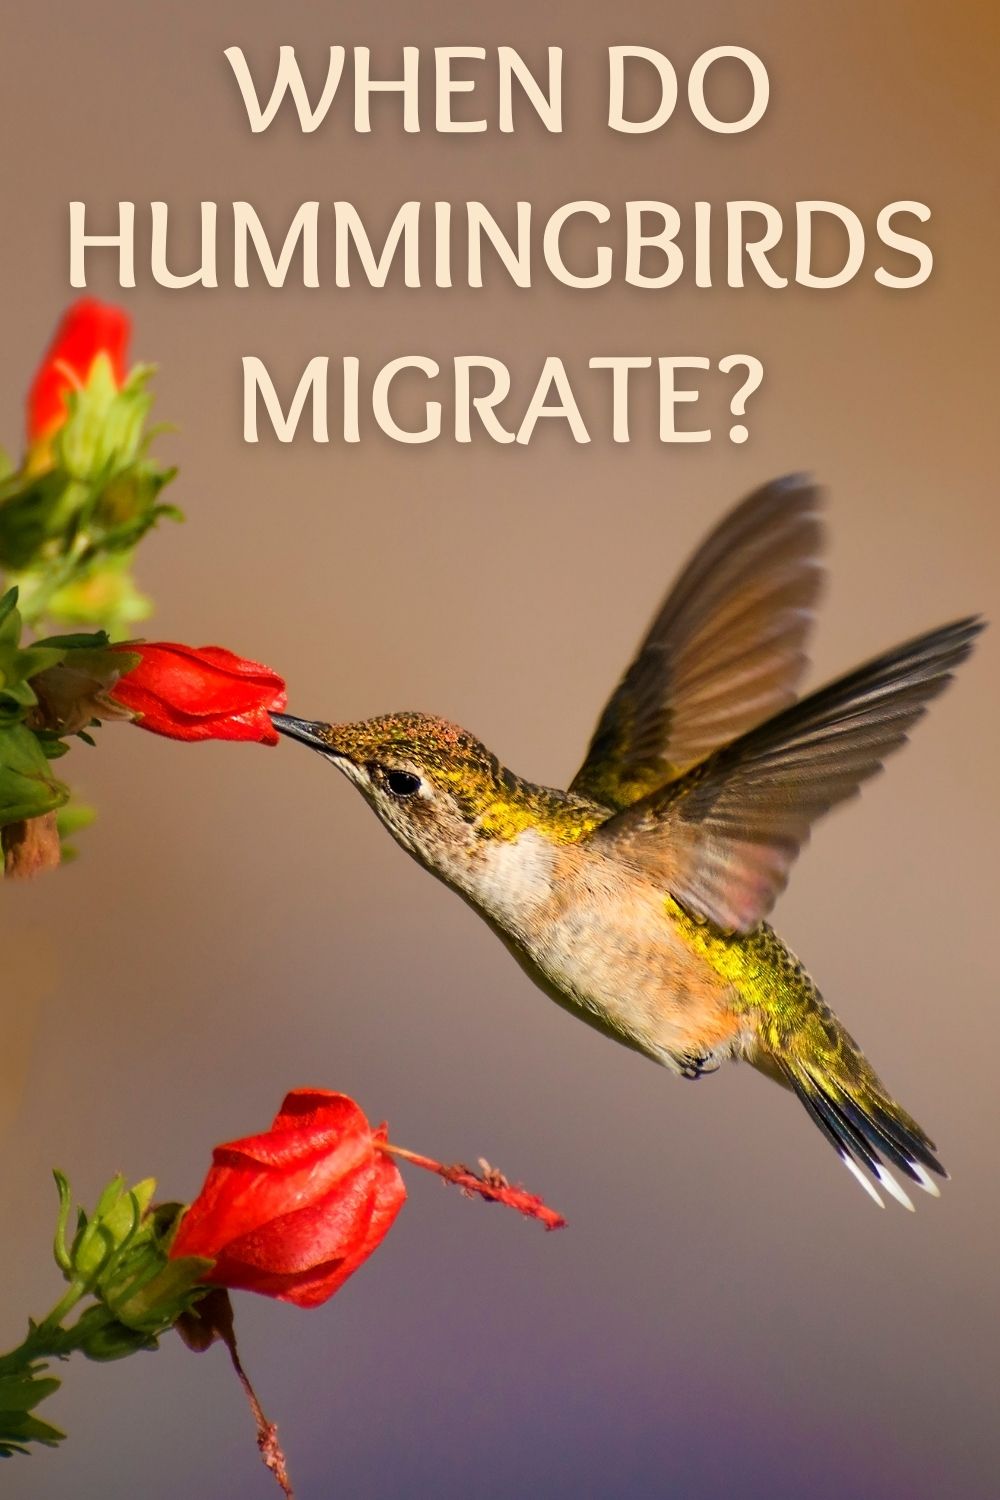 When do hummingbirds migrate?